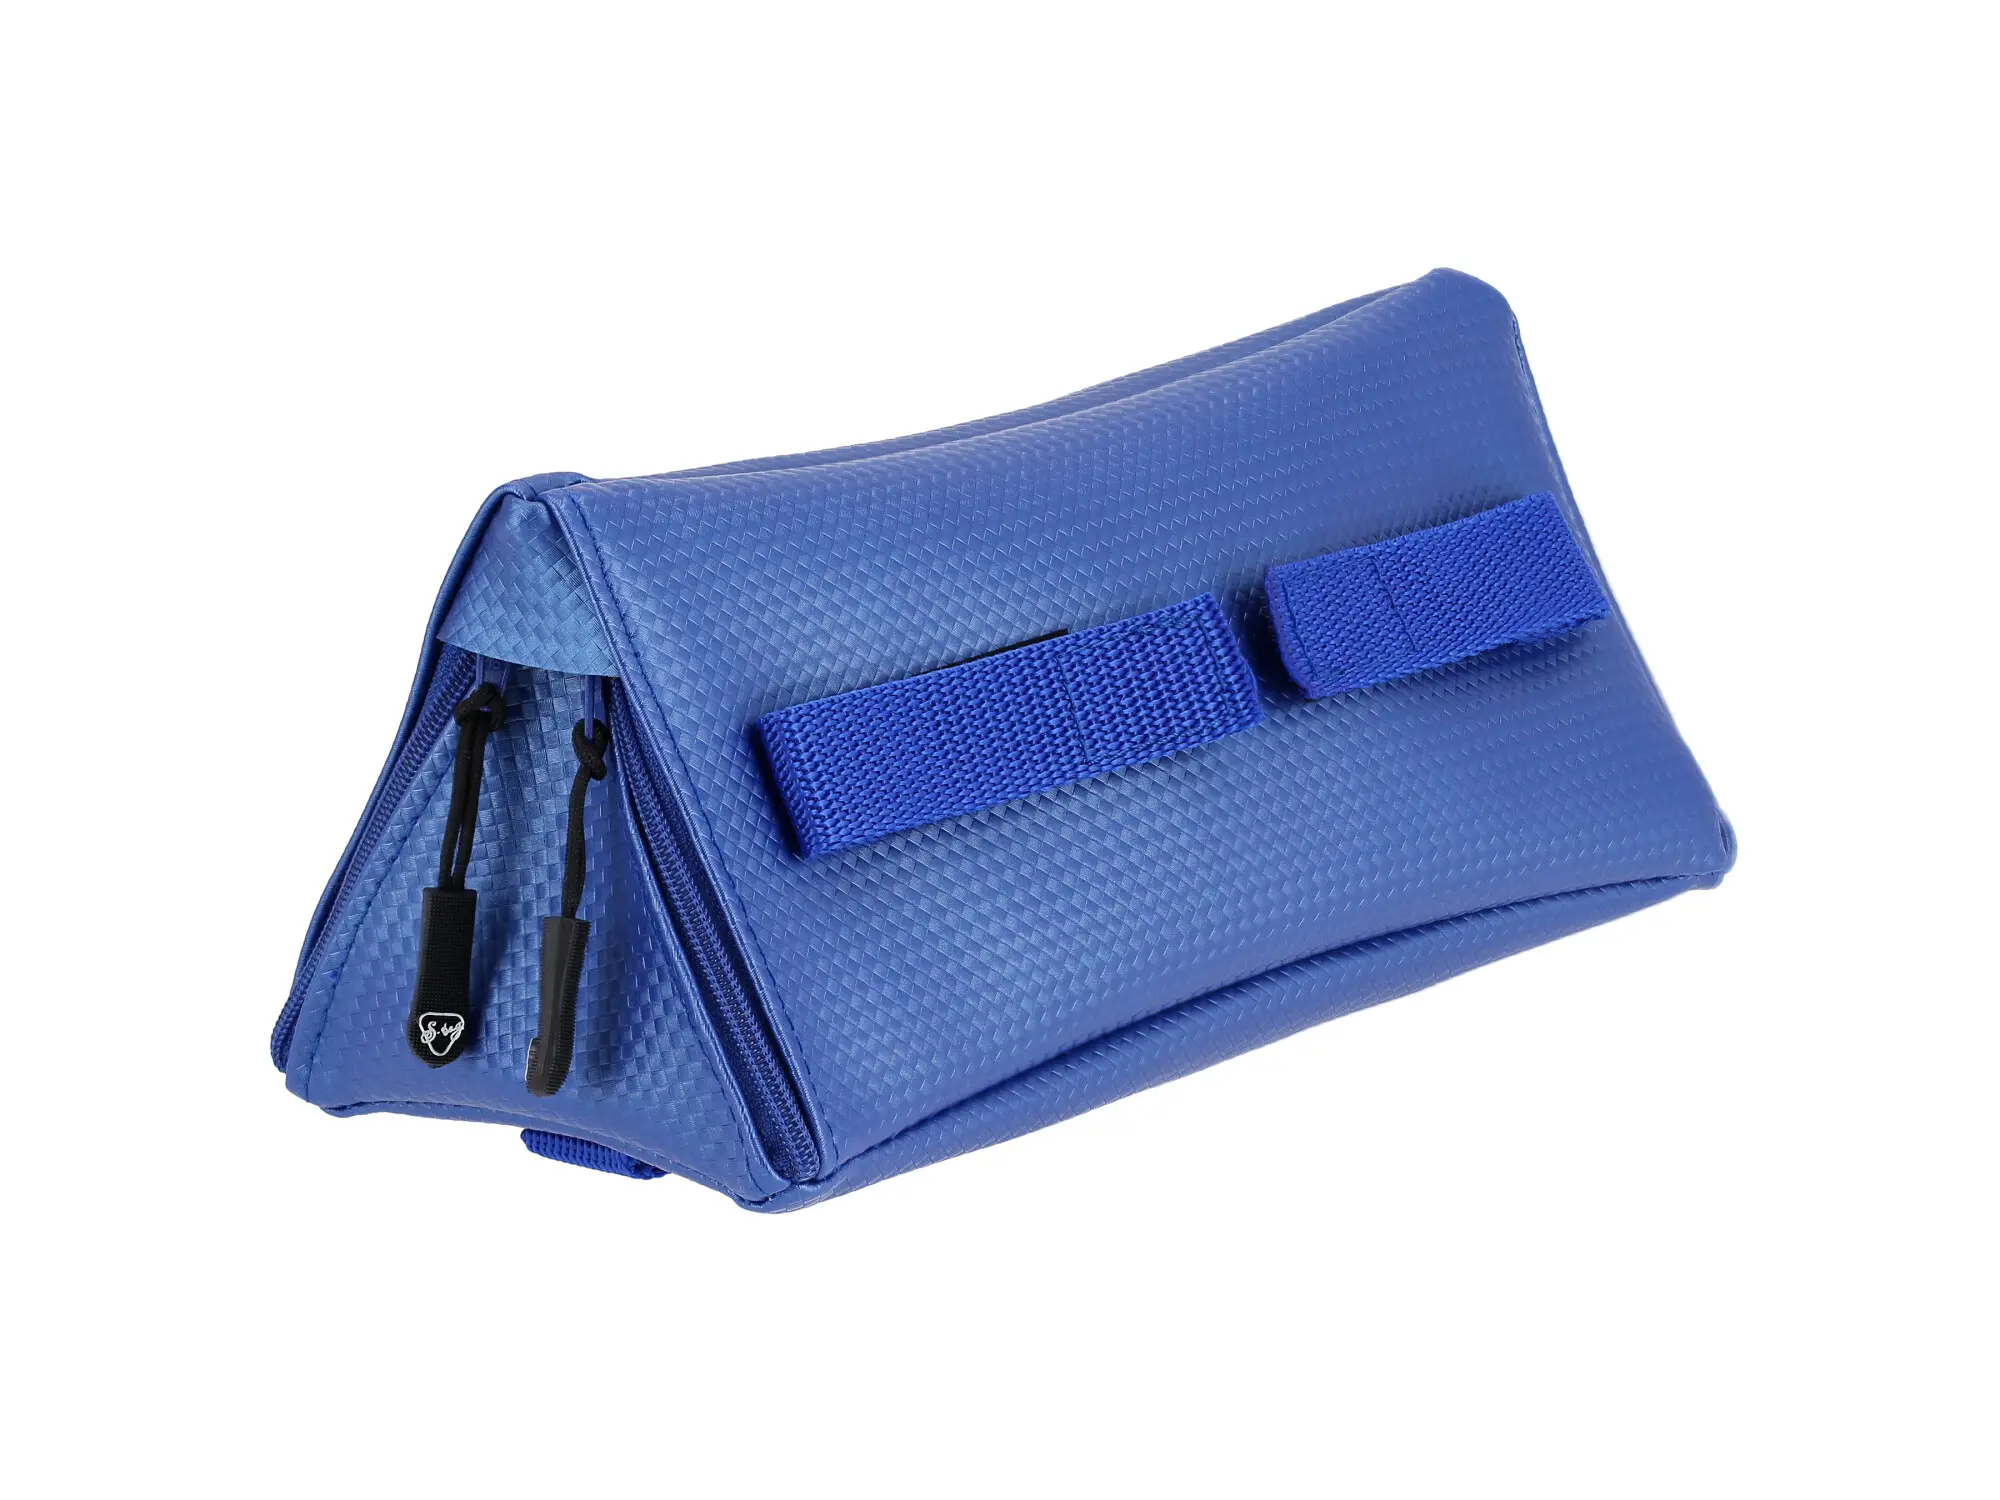 S-Bag Werkzeugtasche, Kunstleder - Carbon Blau, Art.-Nr.: 10075876 - Bild 1